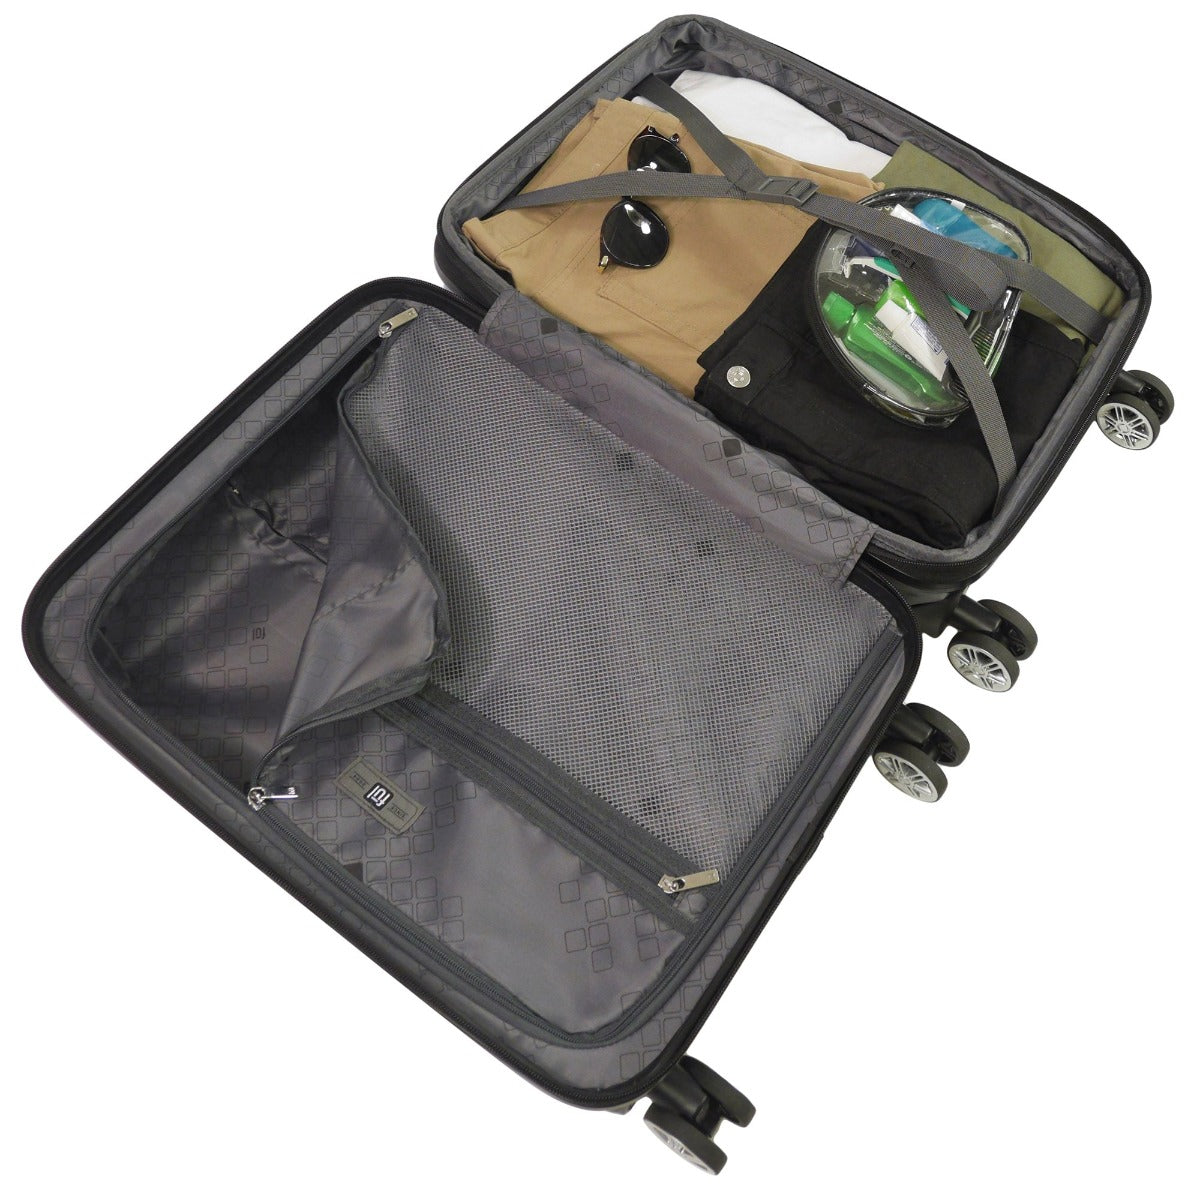 Ful Impulse Ombre Hardside Spinner 31" Luggage, Blue